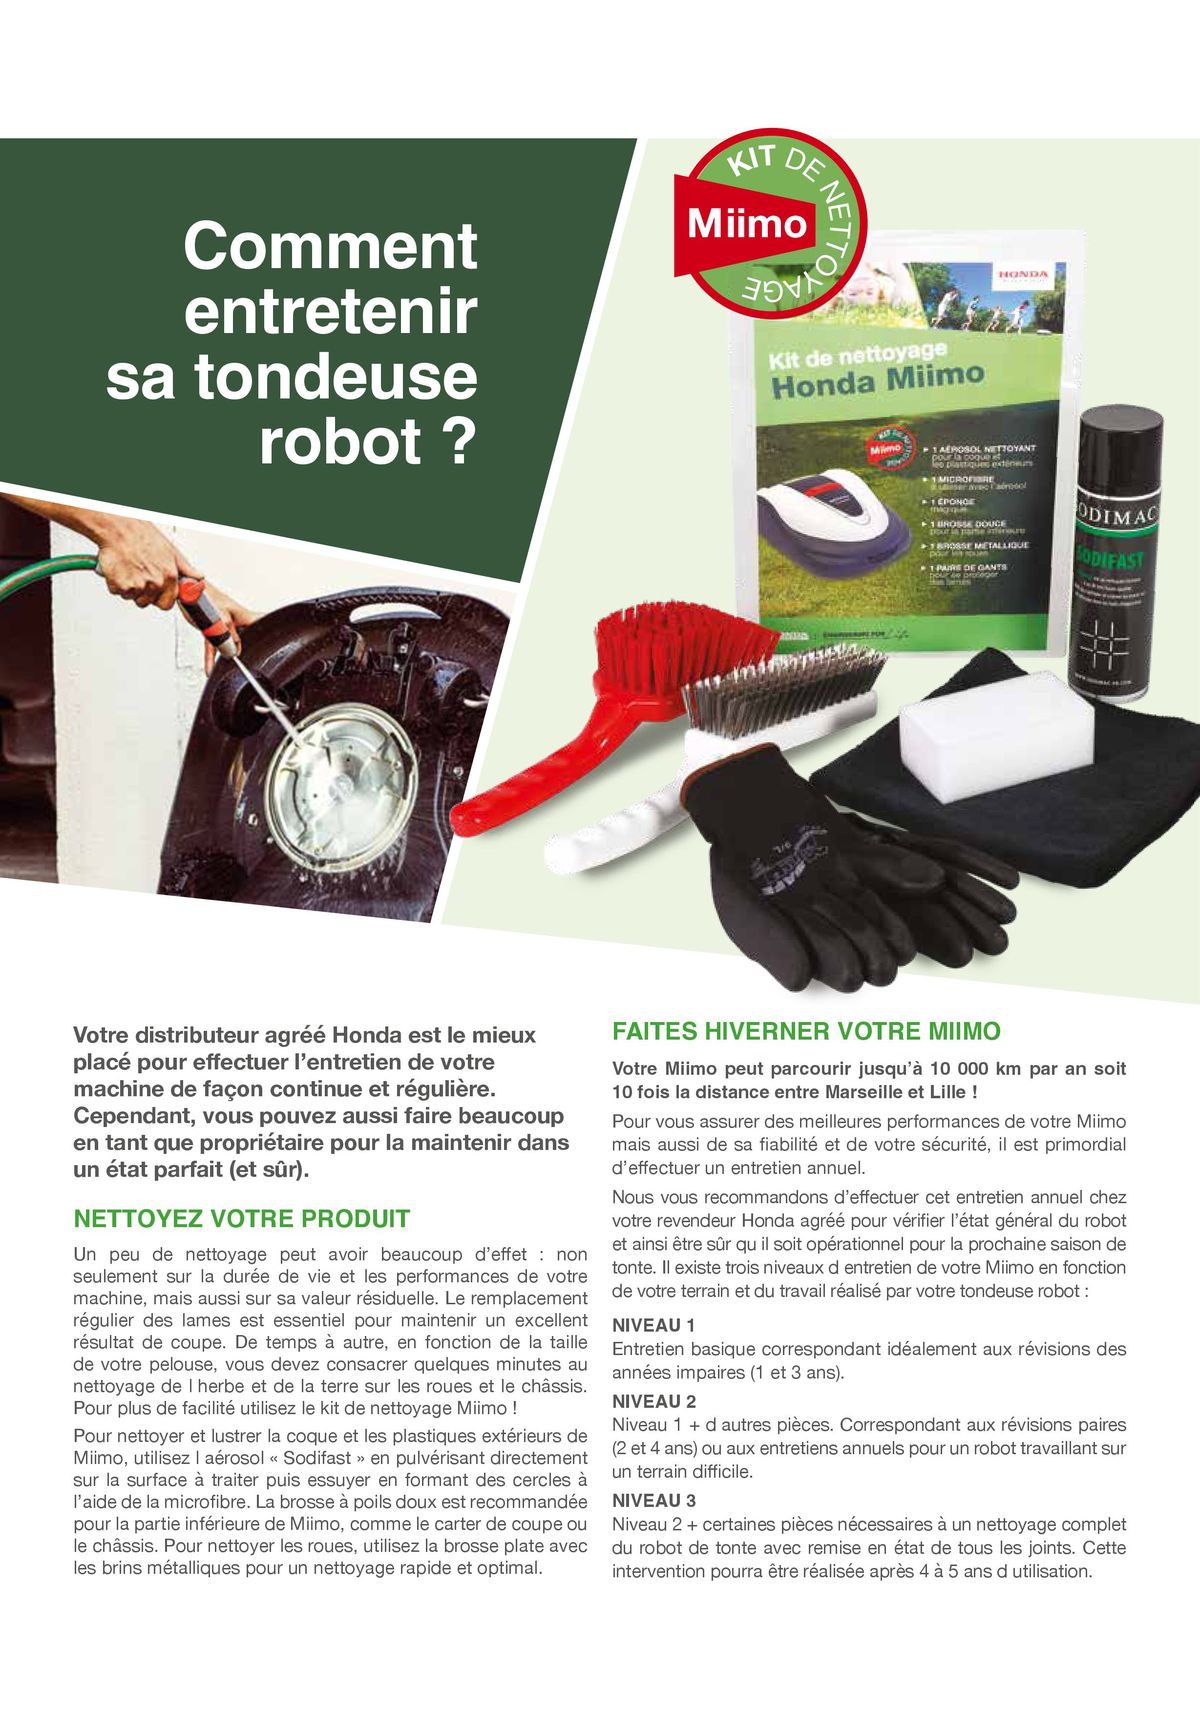 Catalogue Choisir votre tondeuse robot Honda Miimo, page 00003